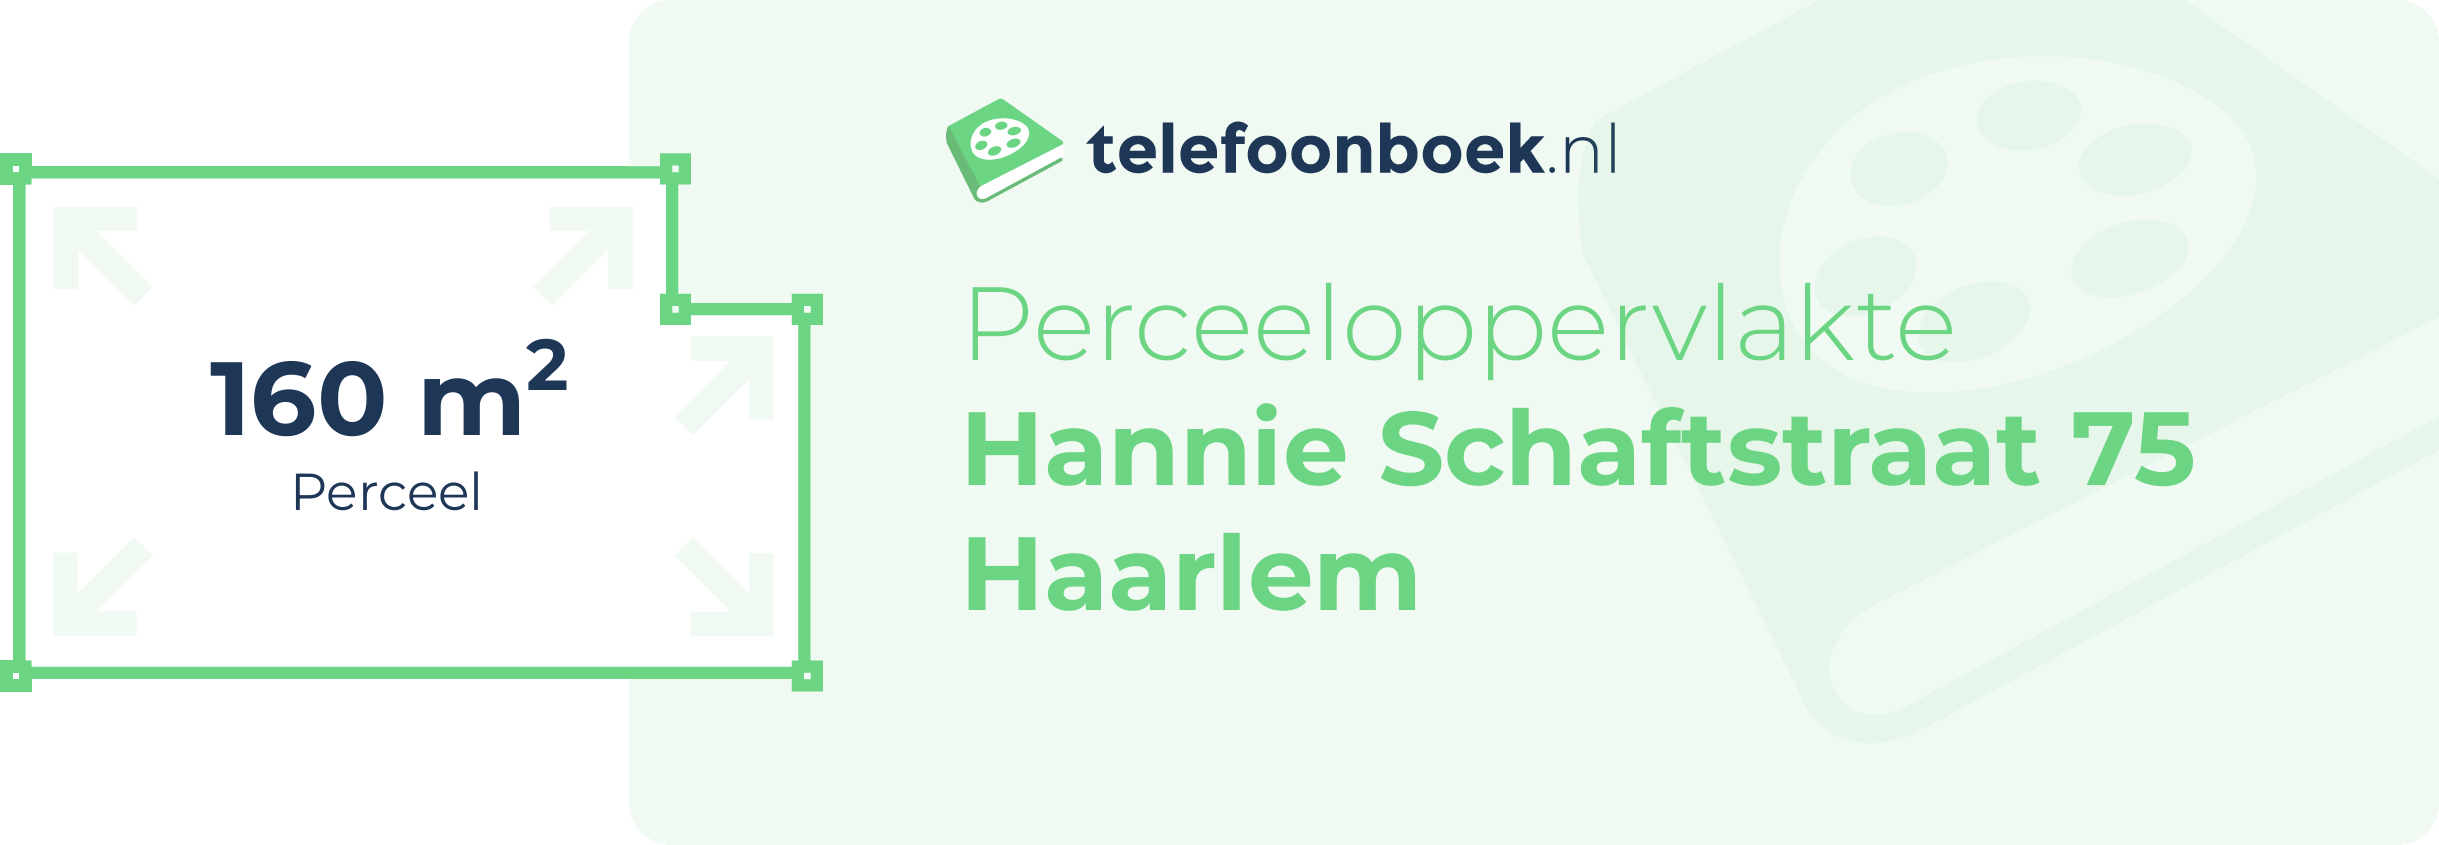 Perceeloppervlakte Hannie Schaftstraat 75 Haarlem